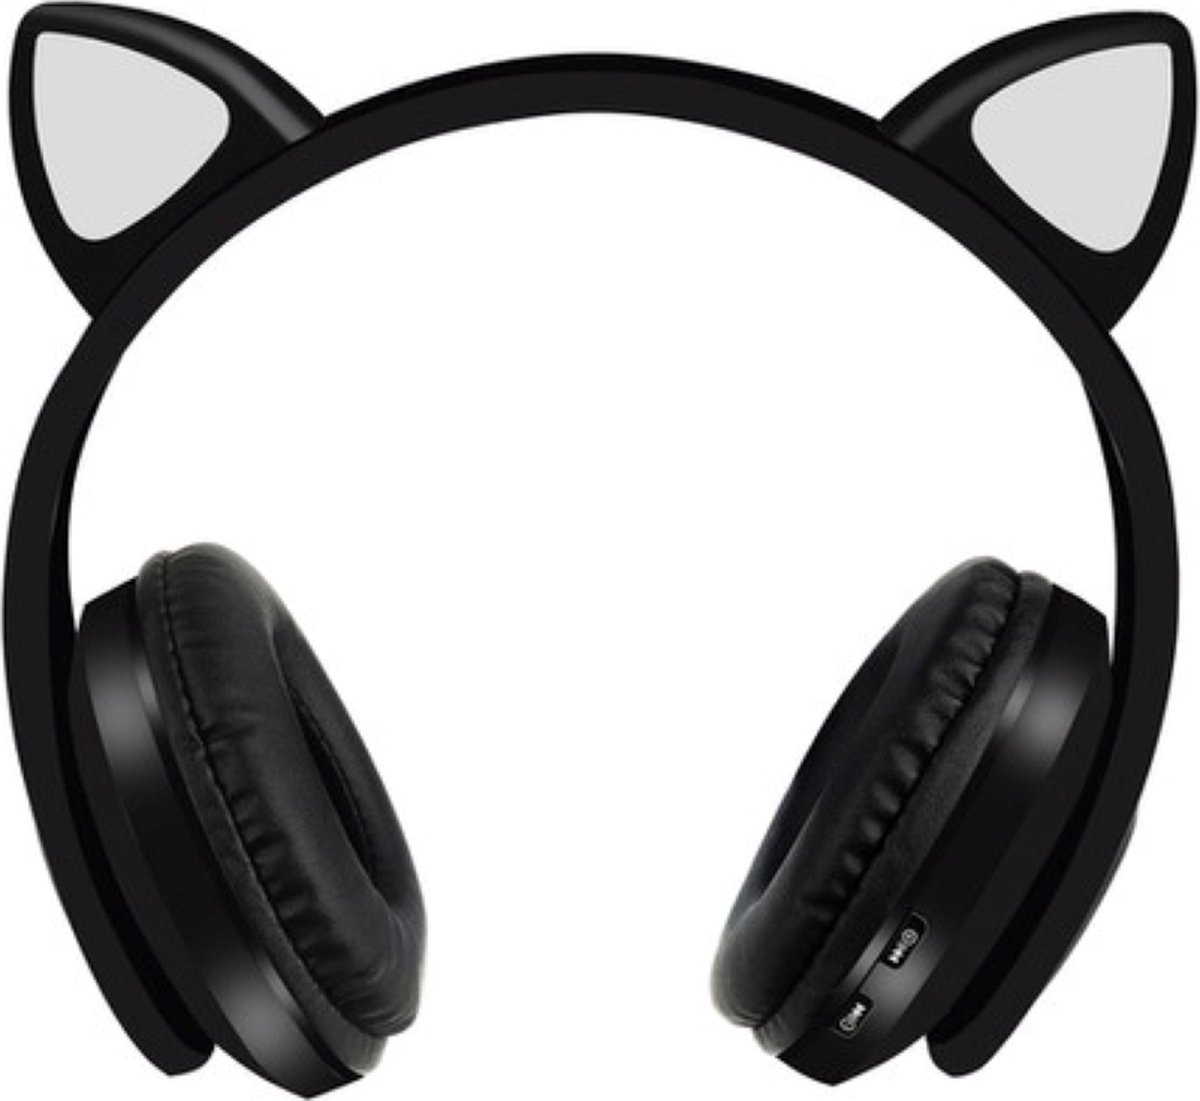 Oneiro's Luxe Wireless headphones with cat ears - black